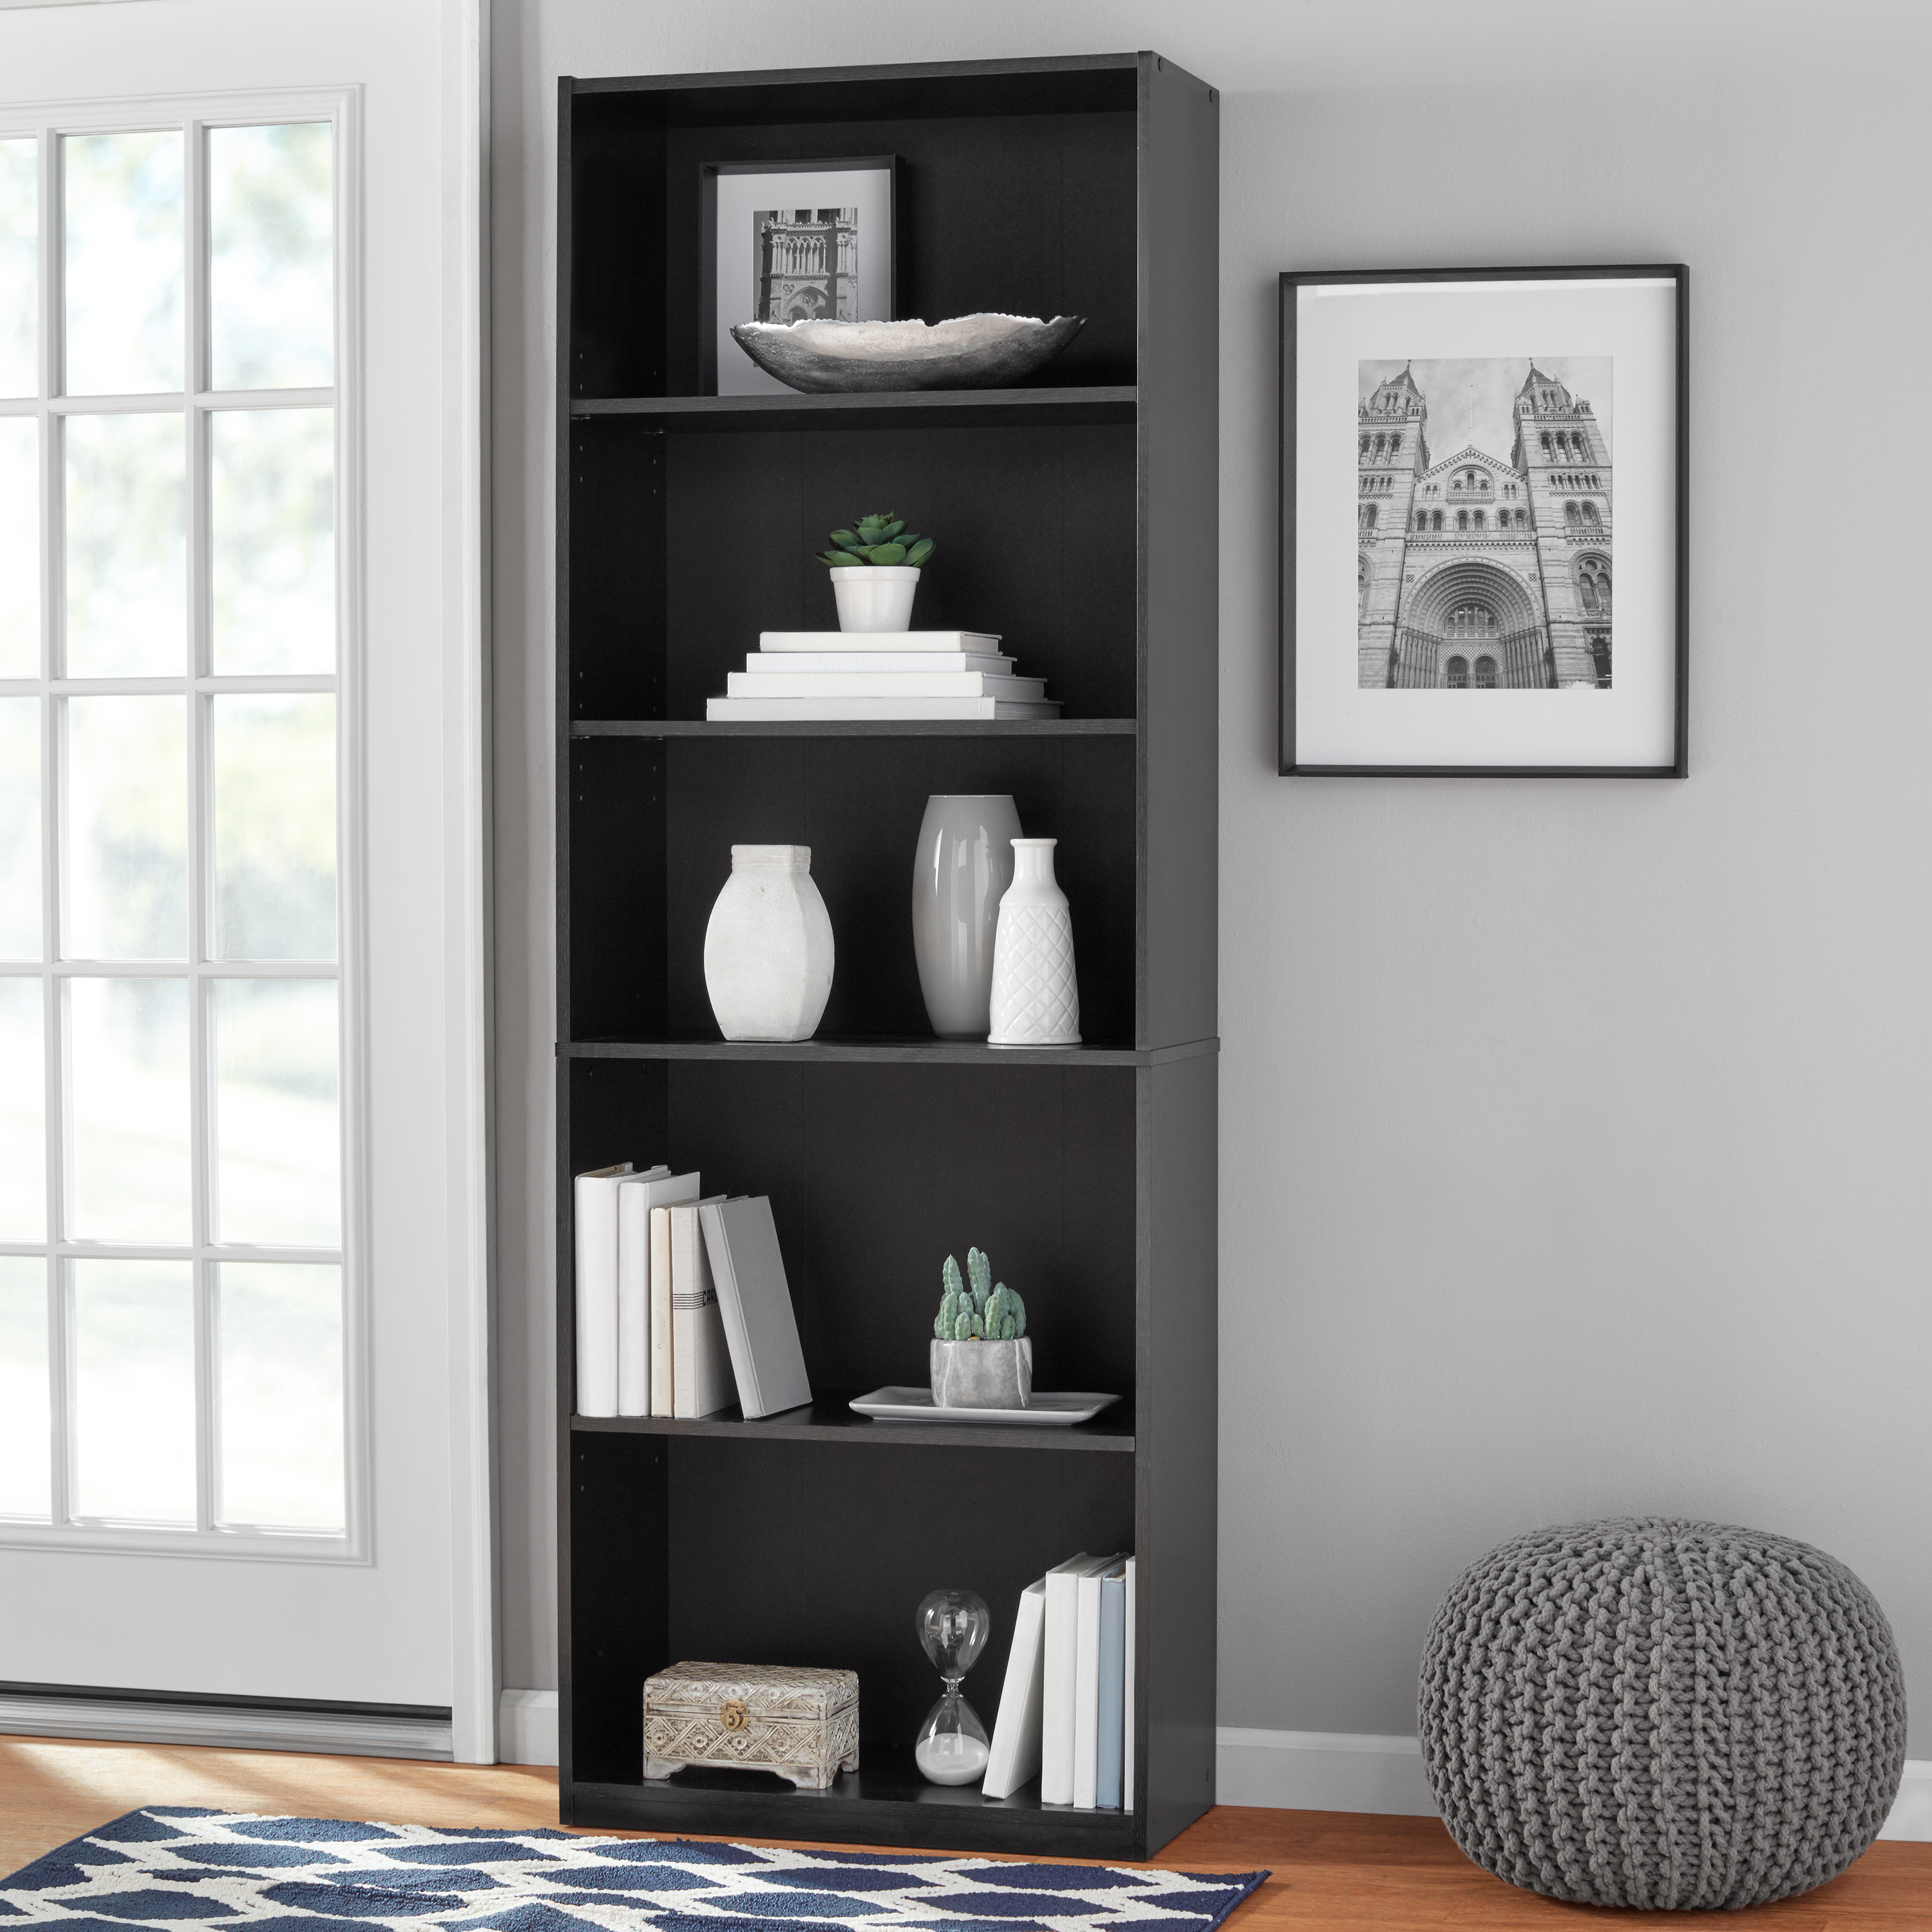 Mainstays 5-Shelf Bookcase with Adjustable Shelves, True Black Oak - image 1 of 8